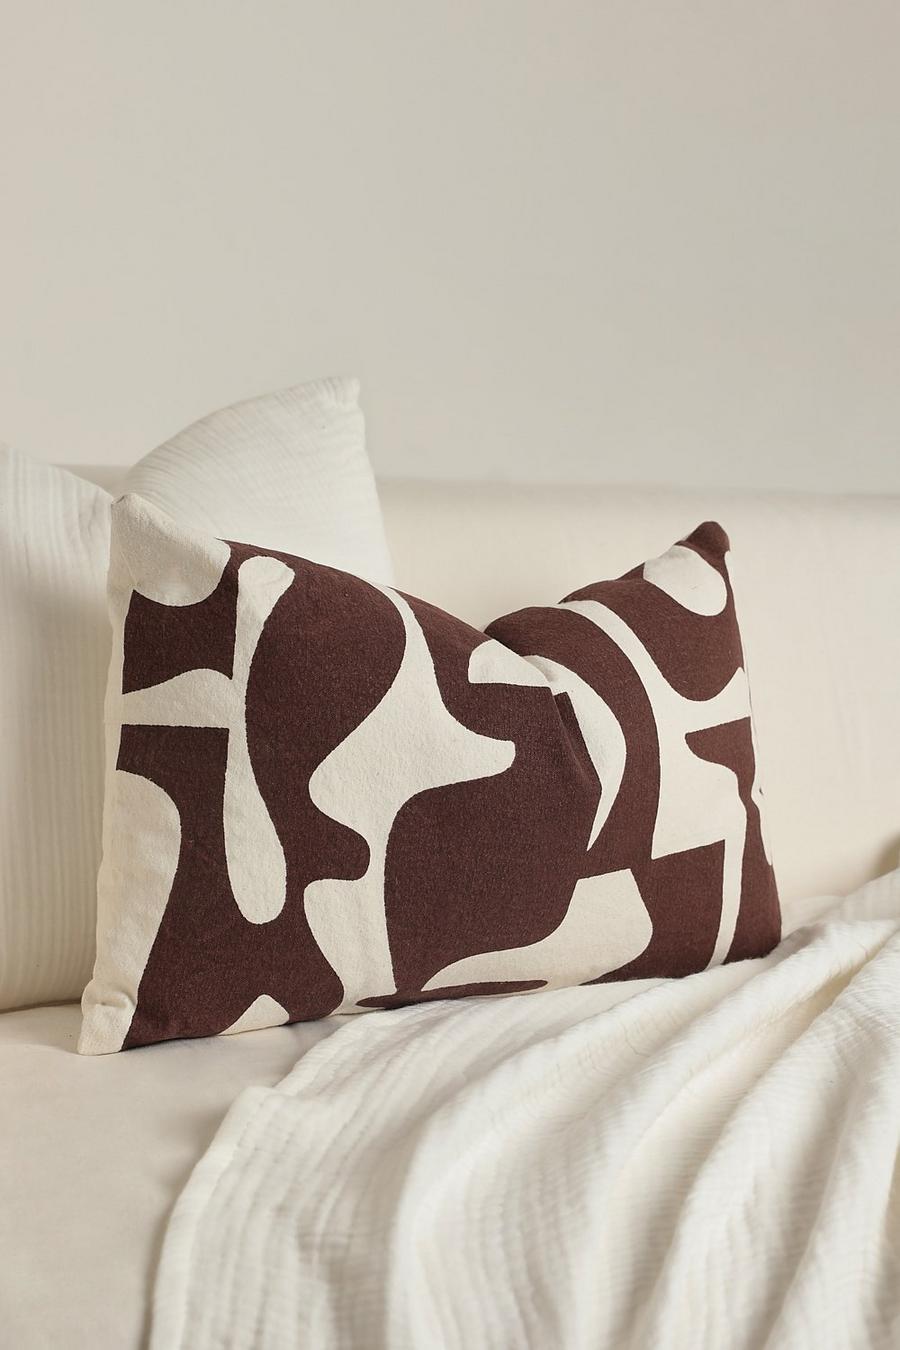 Abstract Chocolate Decorative Cushion